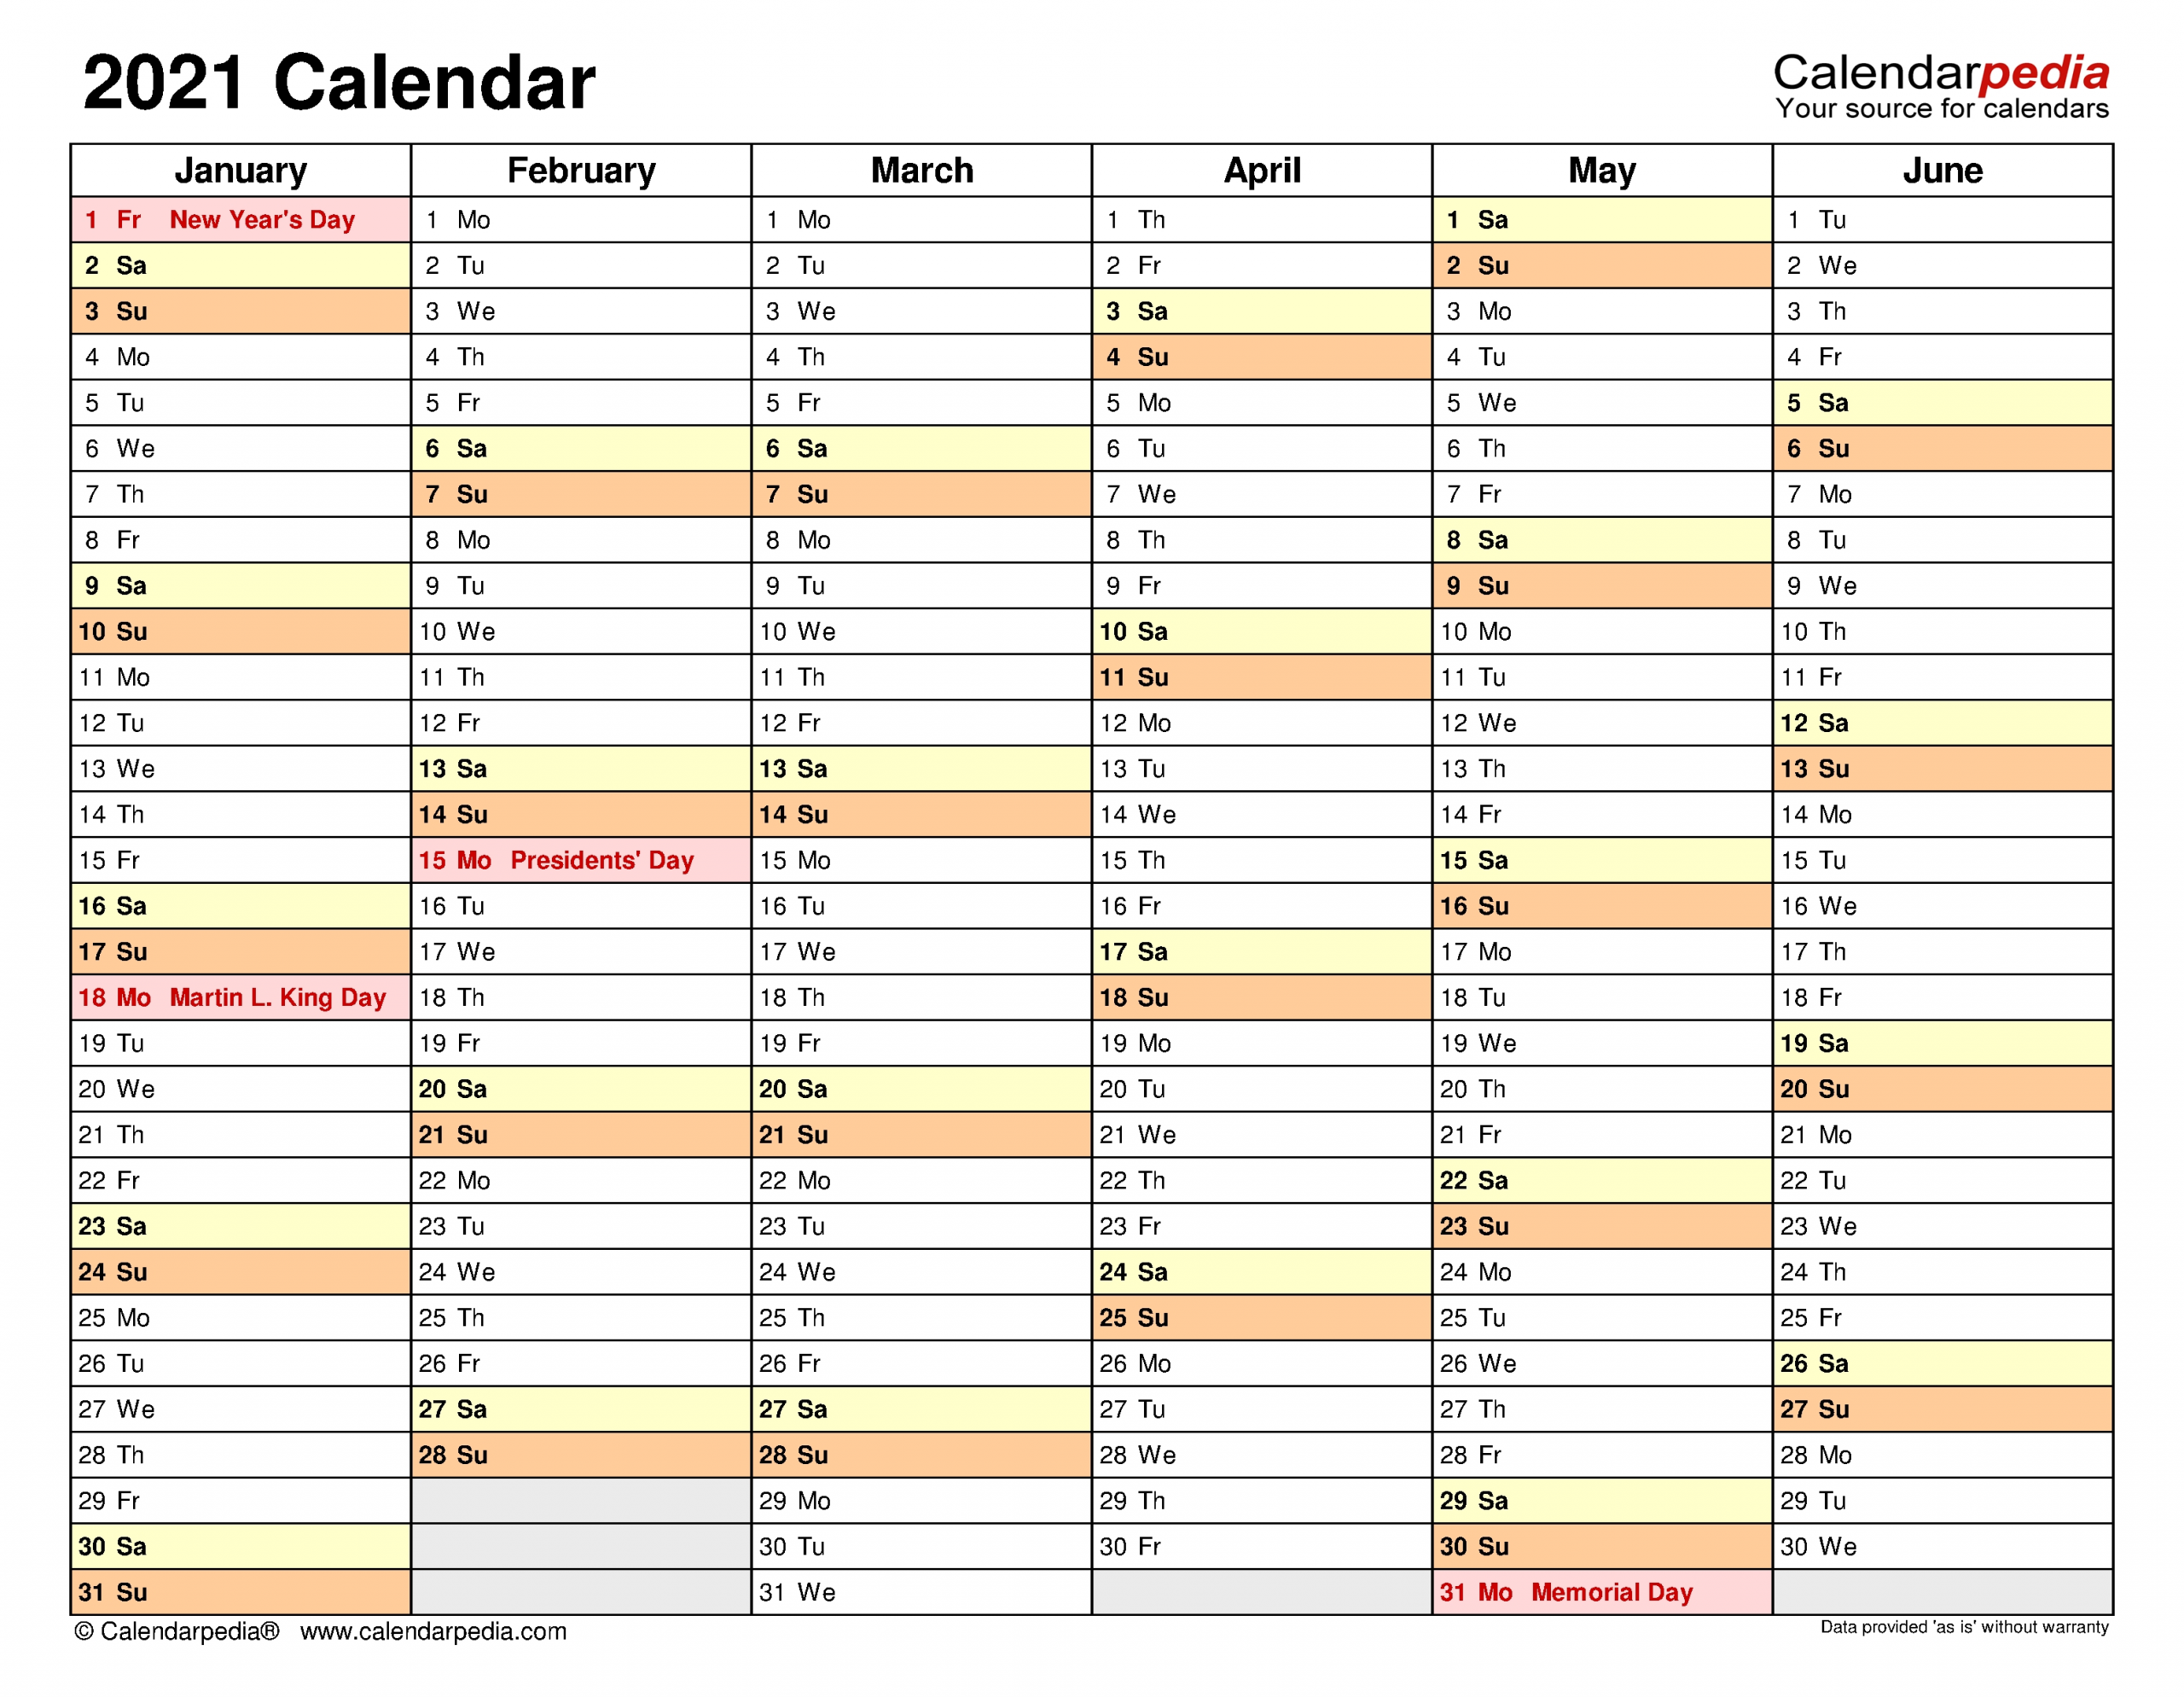 2021 Calendar - Free Printable Excel Templates - Calendarpedia-2021 Editable Yearly Calendar